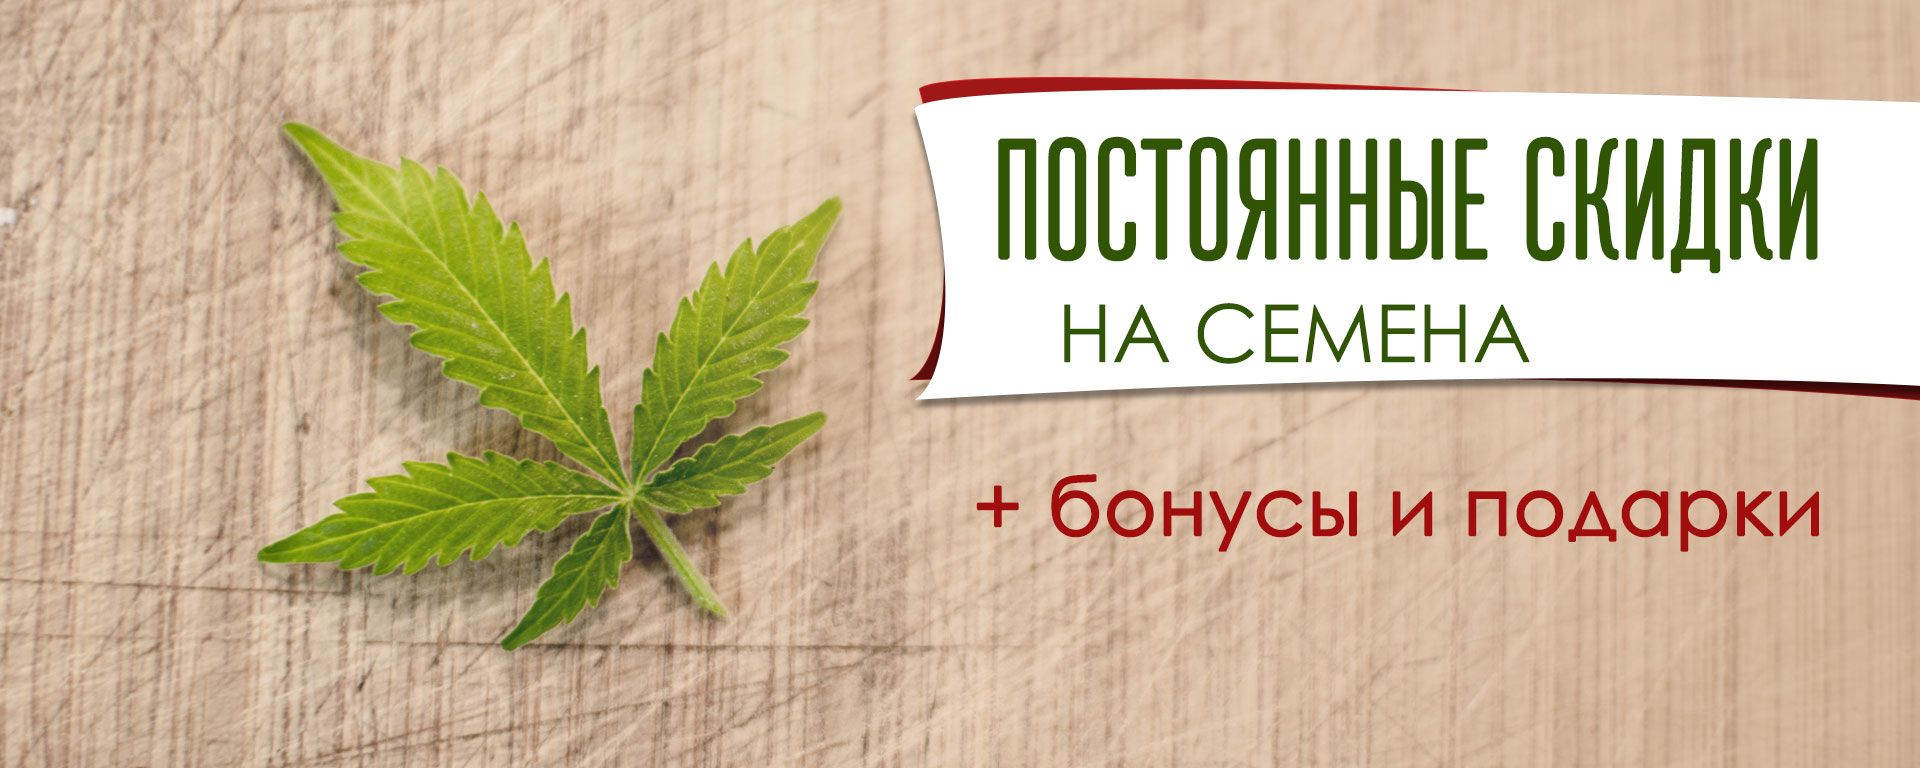 Банк семян марихуаны в украине семена канабиса афган